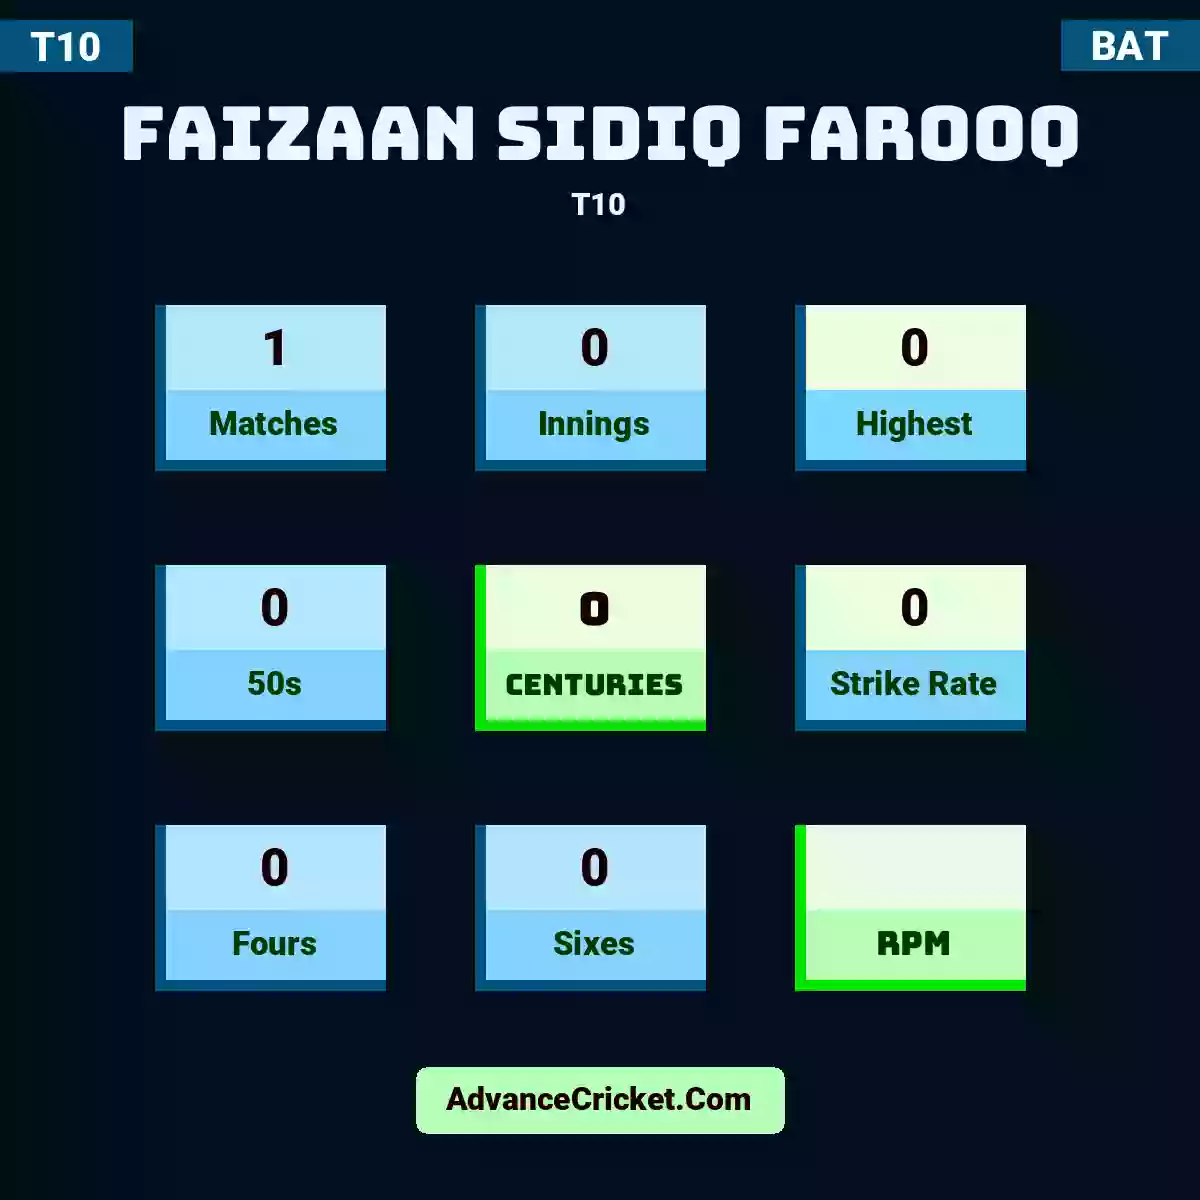 Faizaan Sidiq Farooq T10 , Faizaan Sidiq Farooq played 1 matches, scored 0 runs as highest, 0 half-centuries, and 0 centuries, with a strike rate of 0. F.Sidiq.Farooq hit 0 fours and 0 sixes.